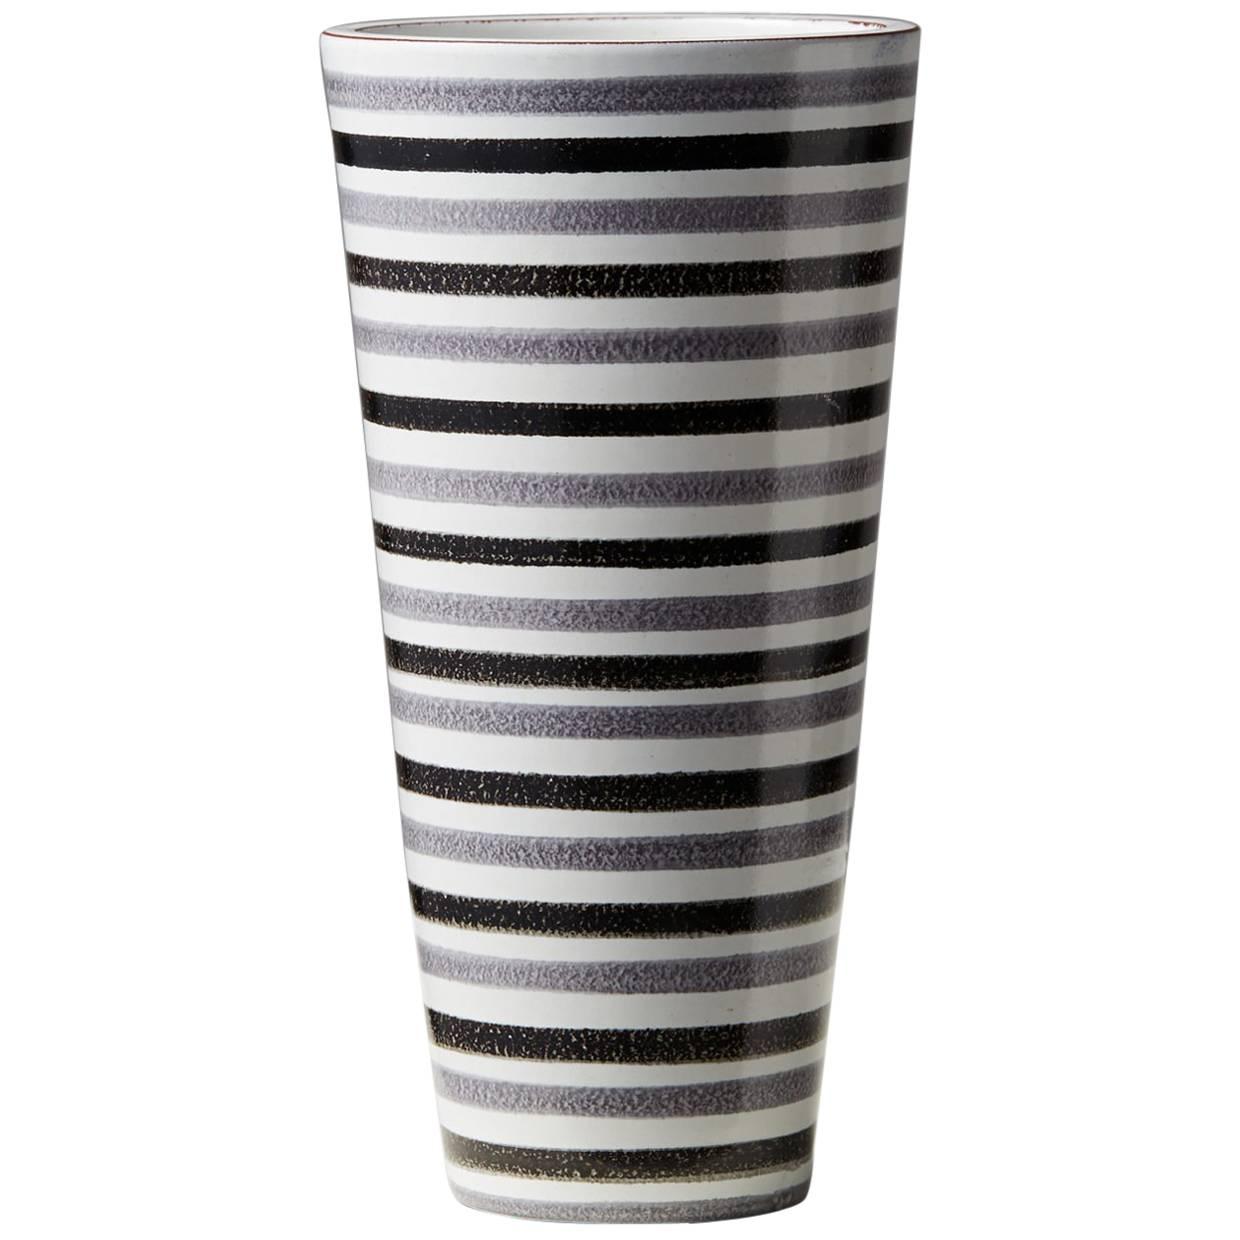 Vase Designed by Stig Lindberg for Gustavsberg, Sweden, 1950s